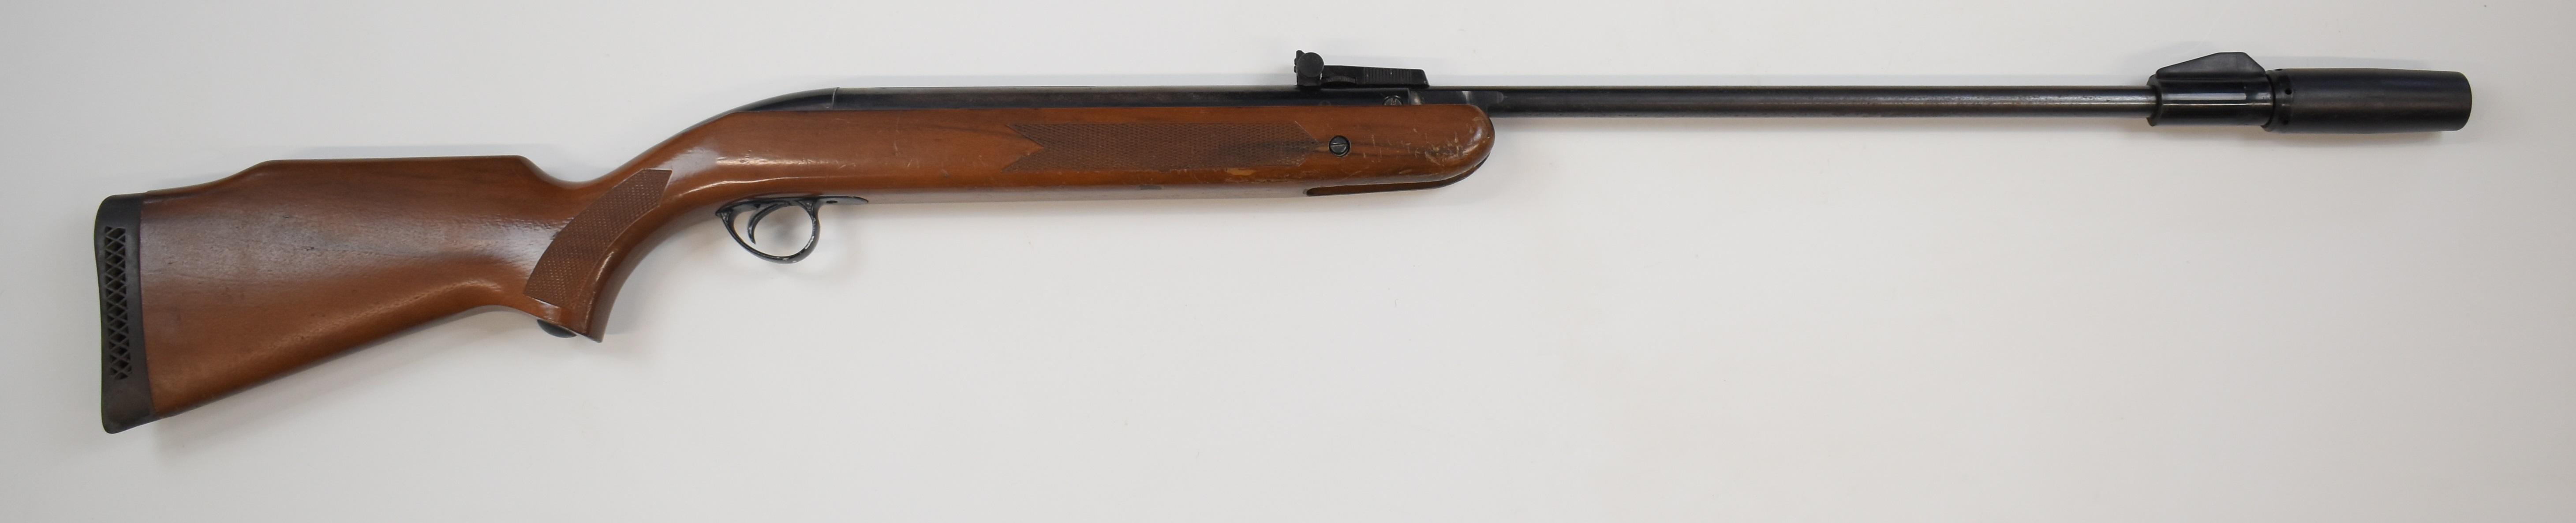 BSA Mercury Mk II .22 air rifle with semi-pistol grip, raised cheek piece, adjustable sights and - Image 2 of 9